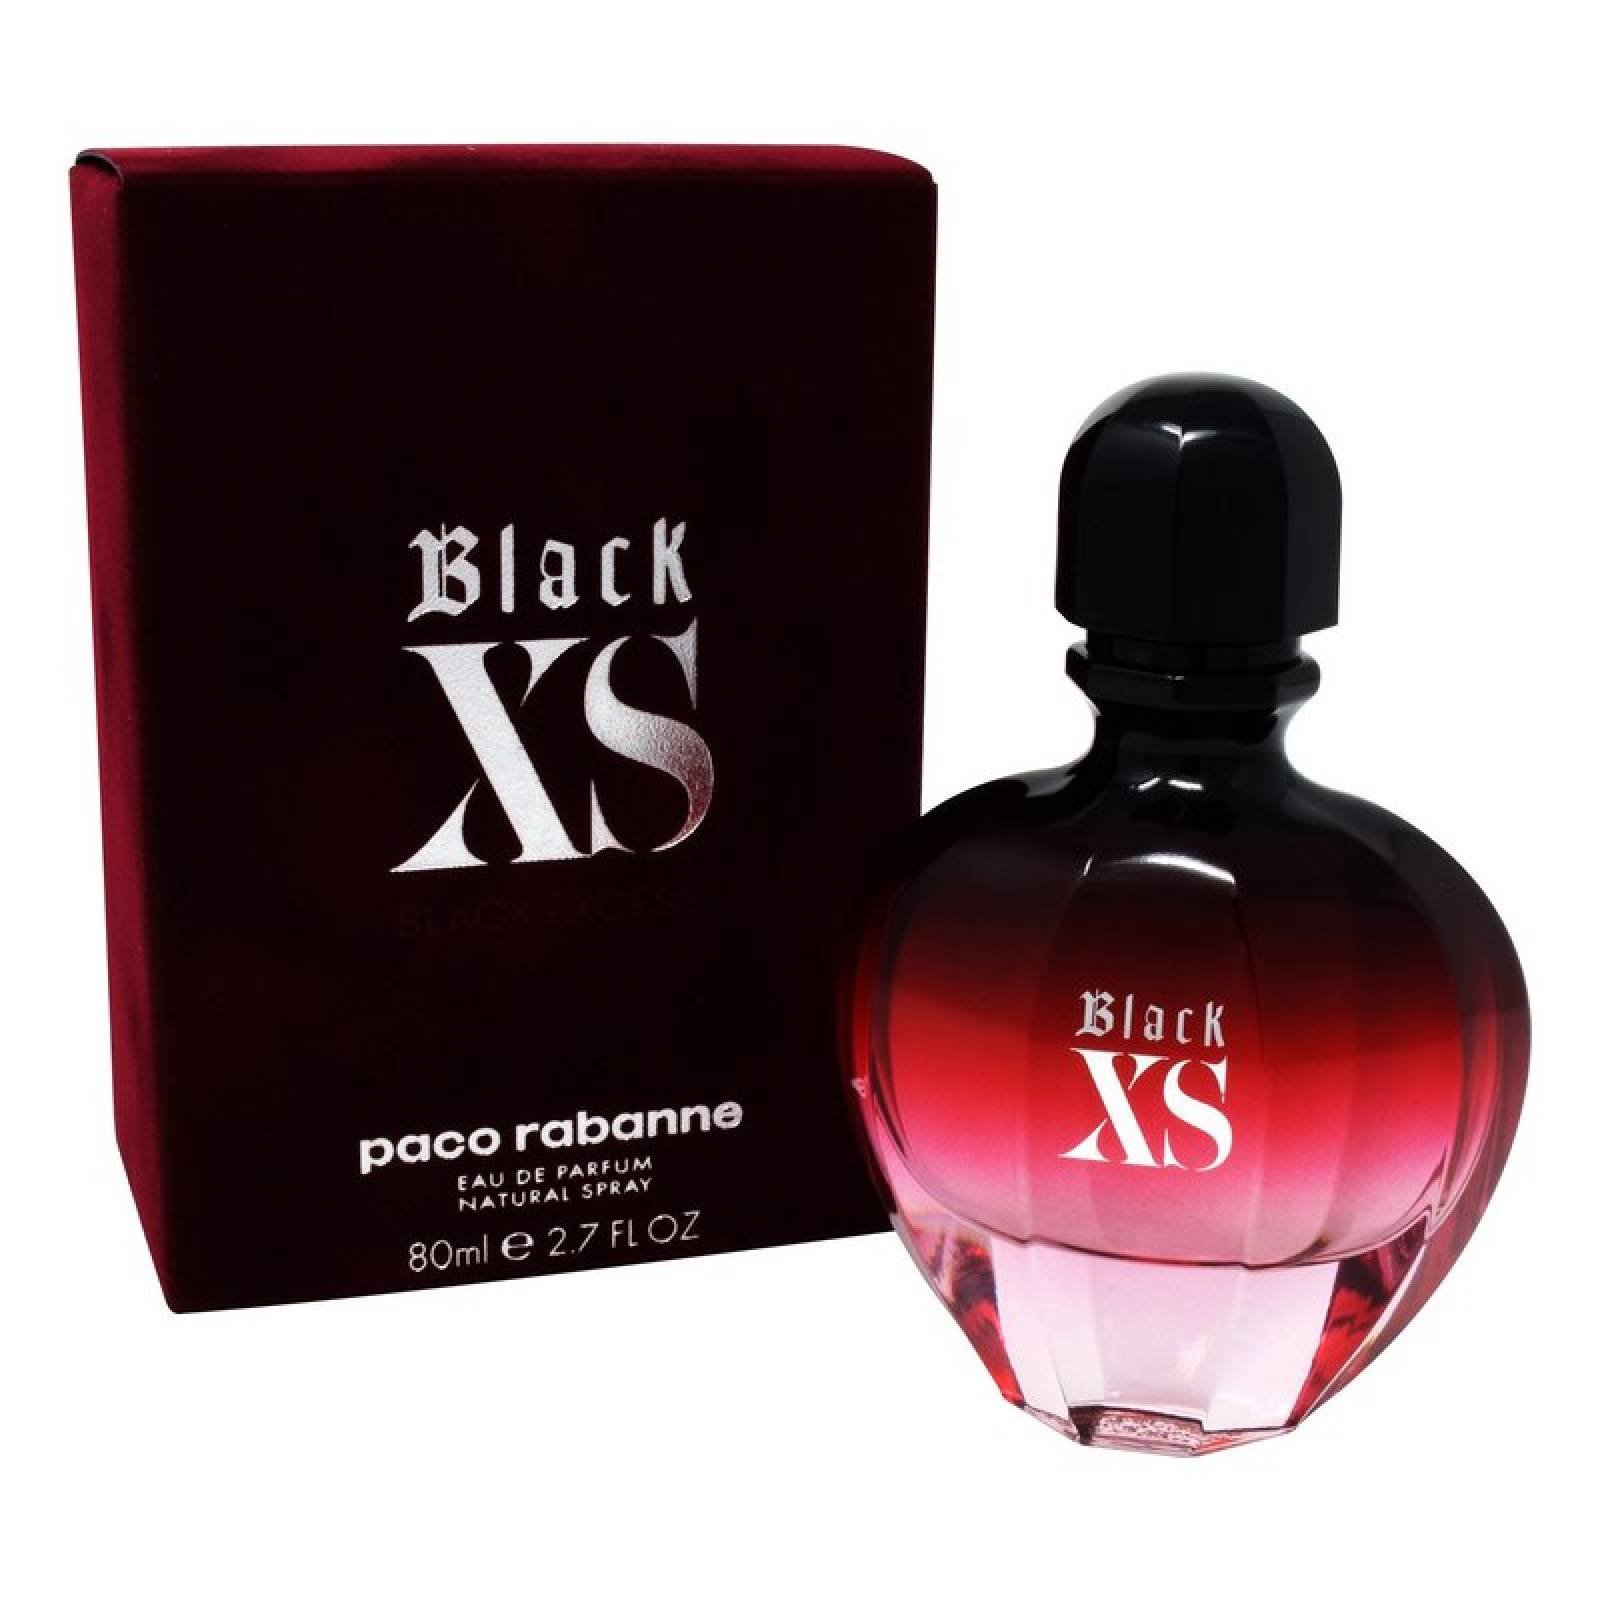 Black Xs For Her 80 ml Edp Spray de Paco Rabanne